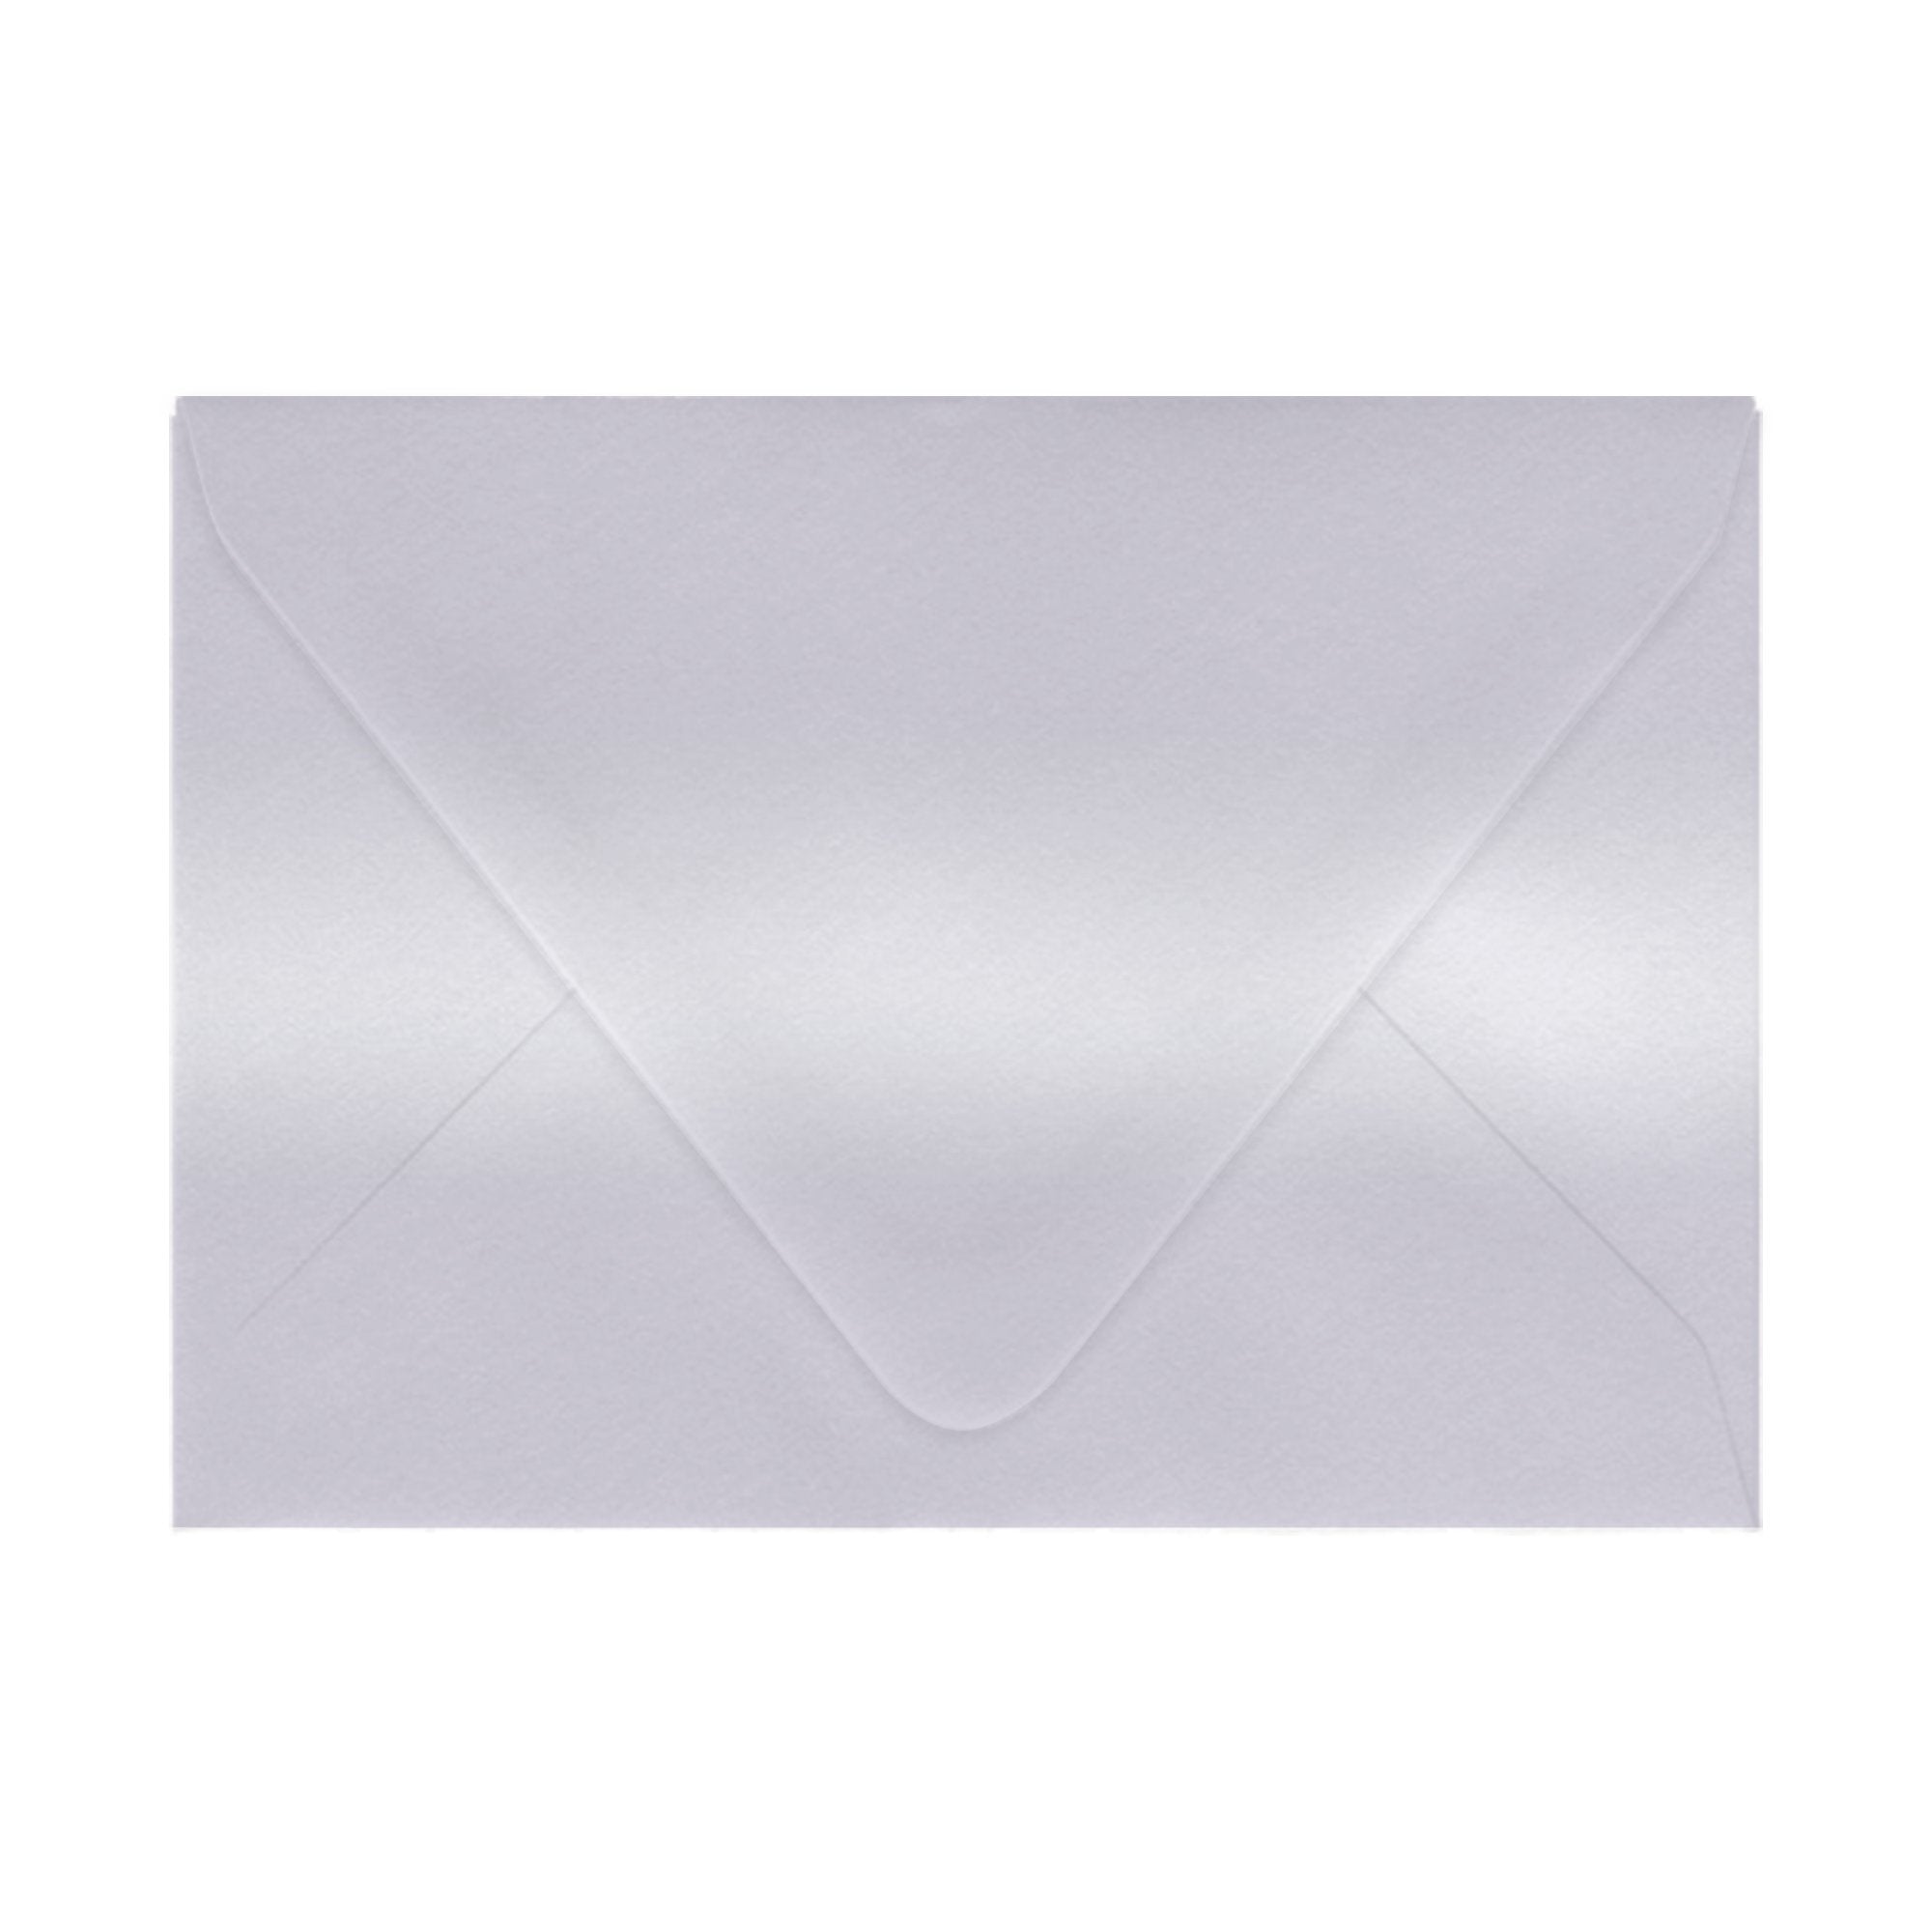 A7 Tick Envelope